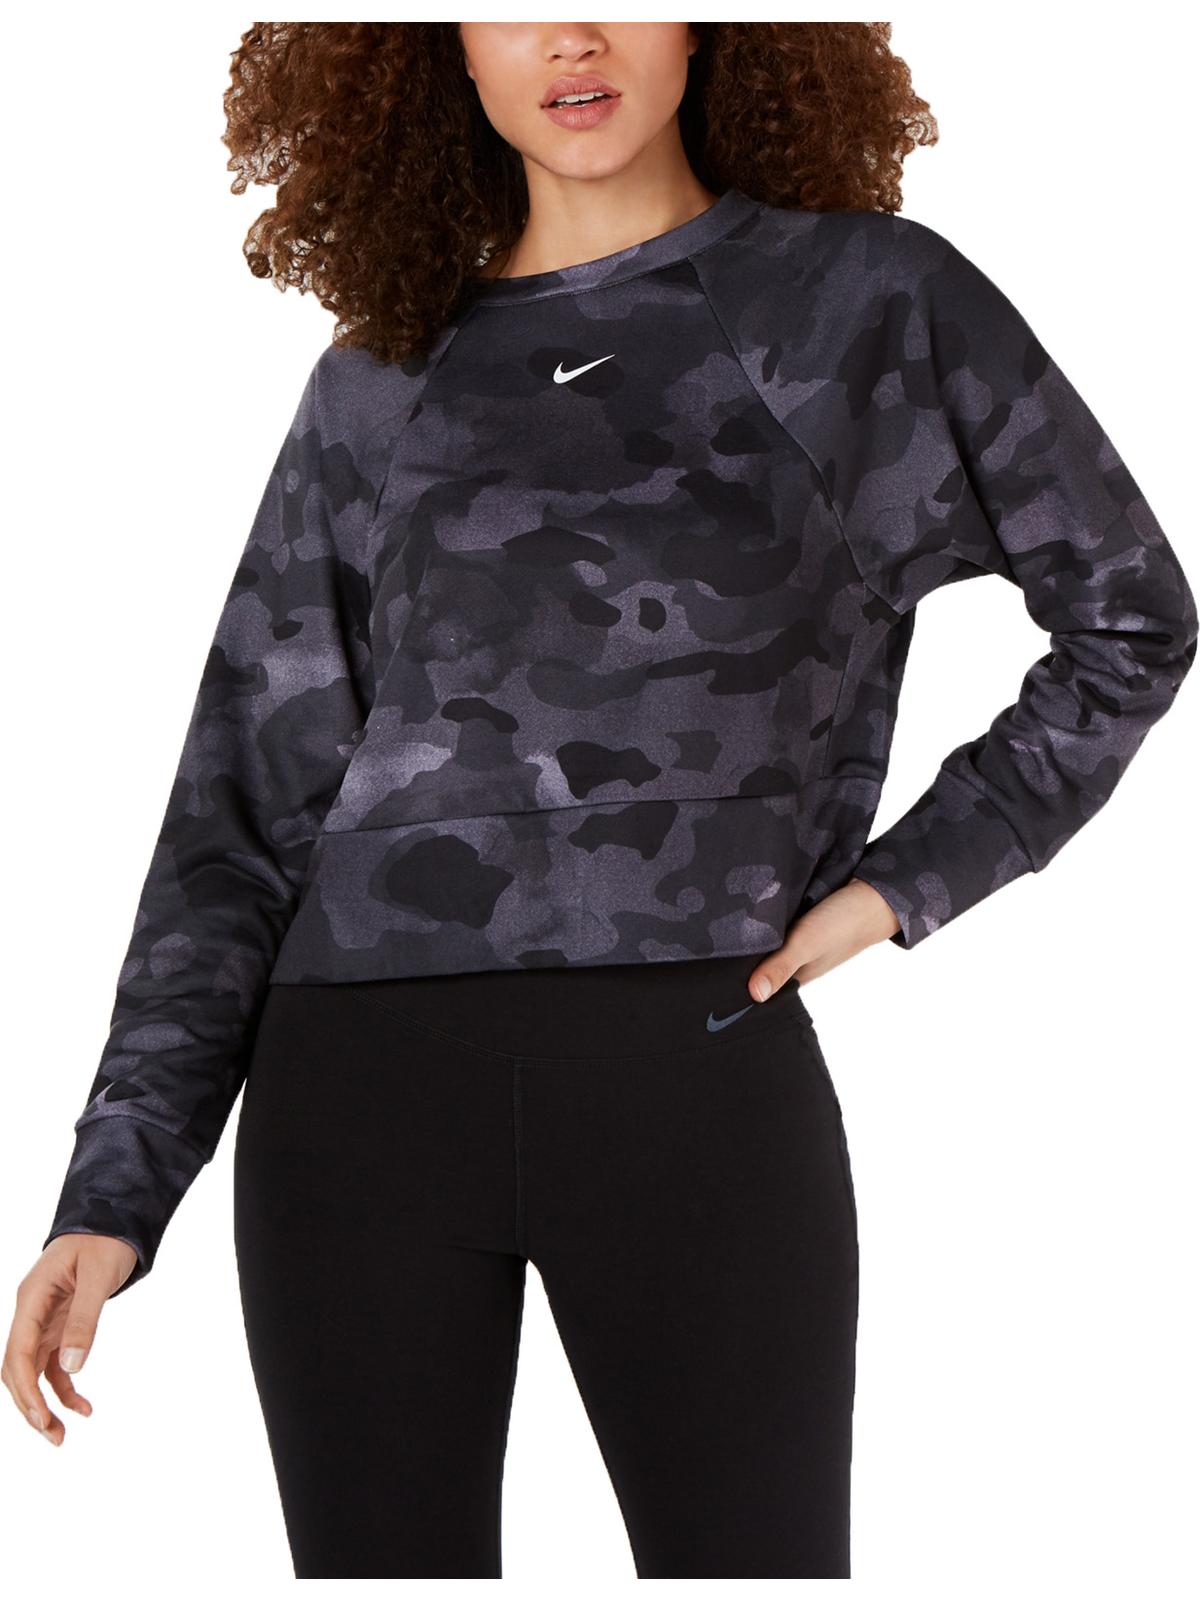 Nike Womens Sweatshirt Fitness - image 1 of 1